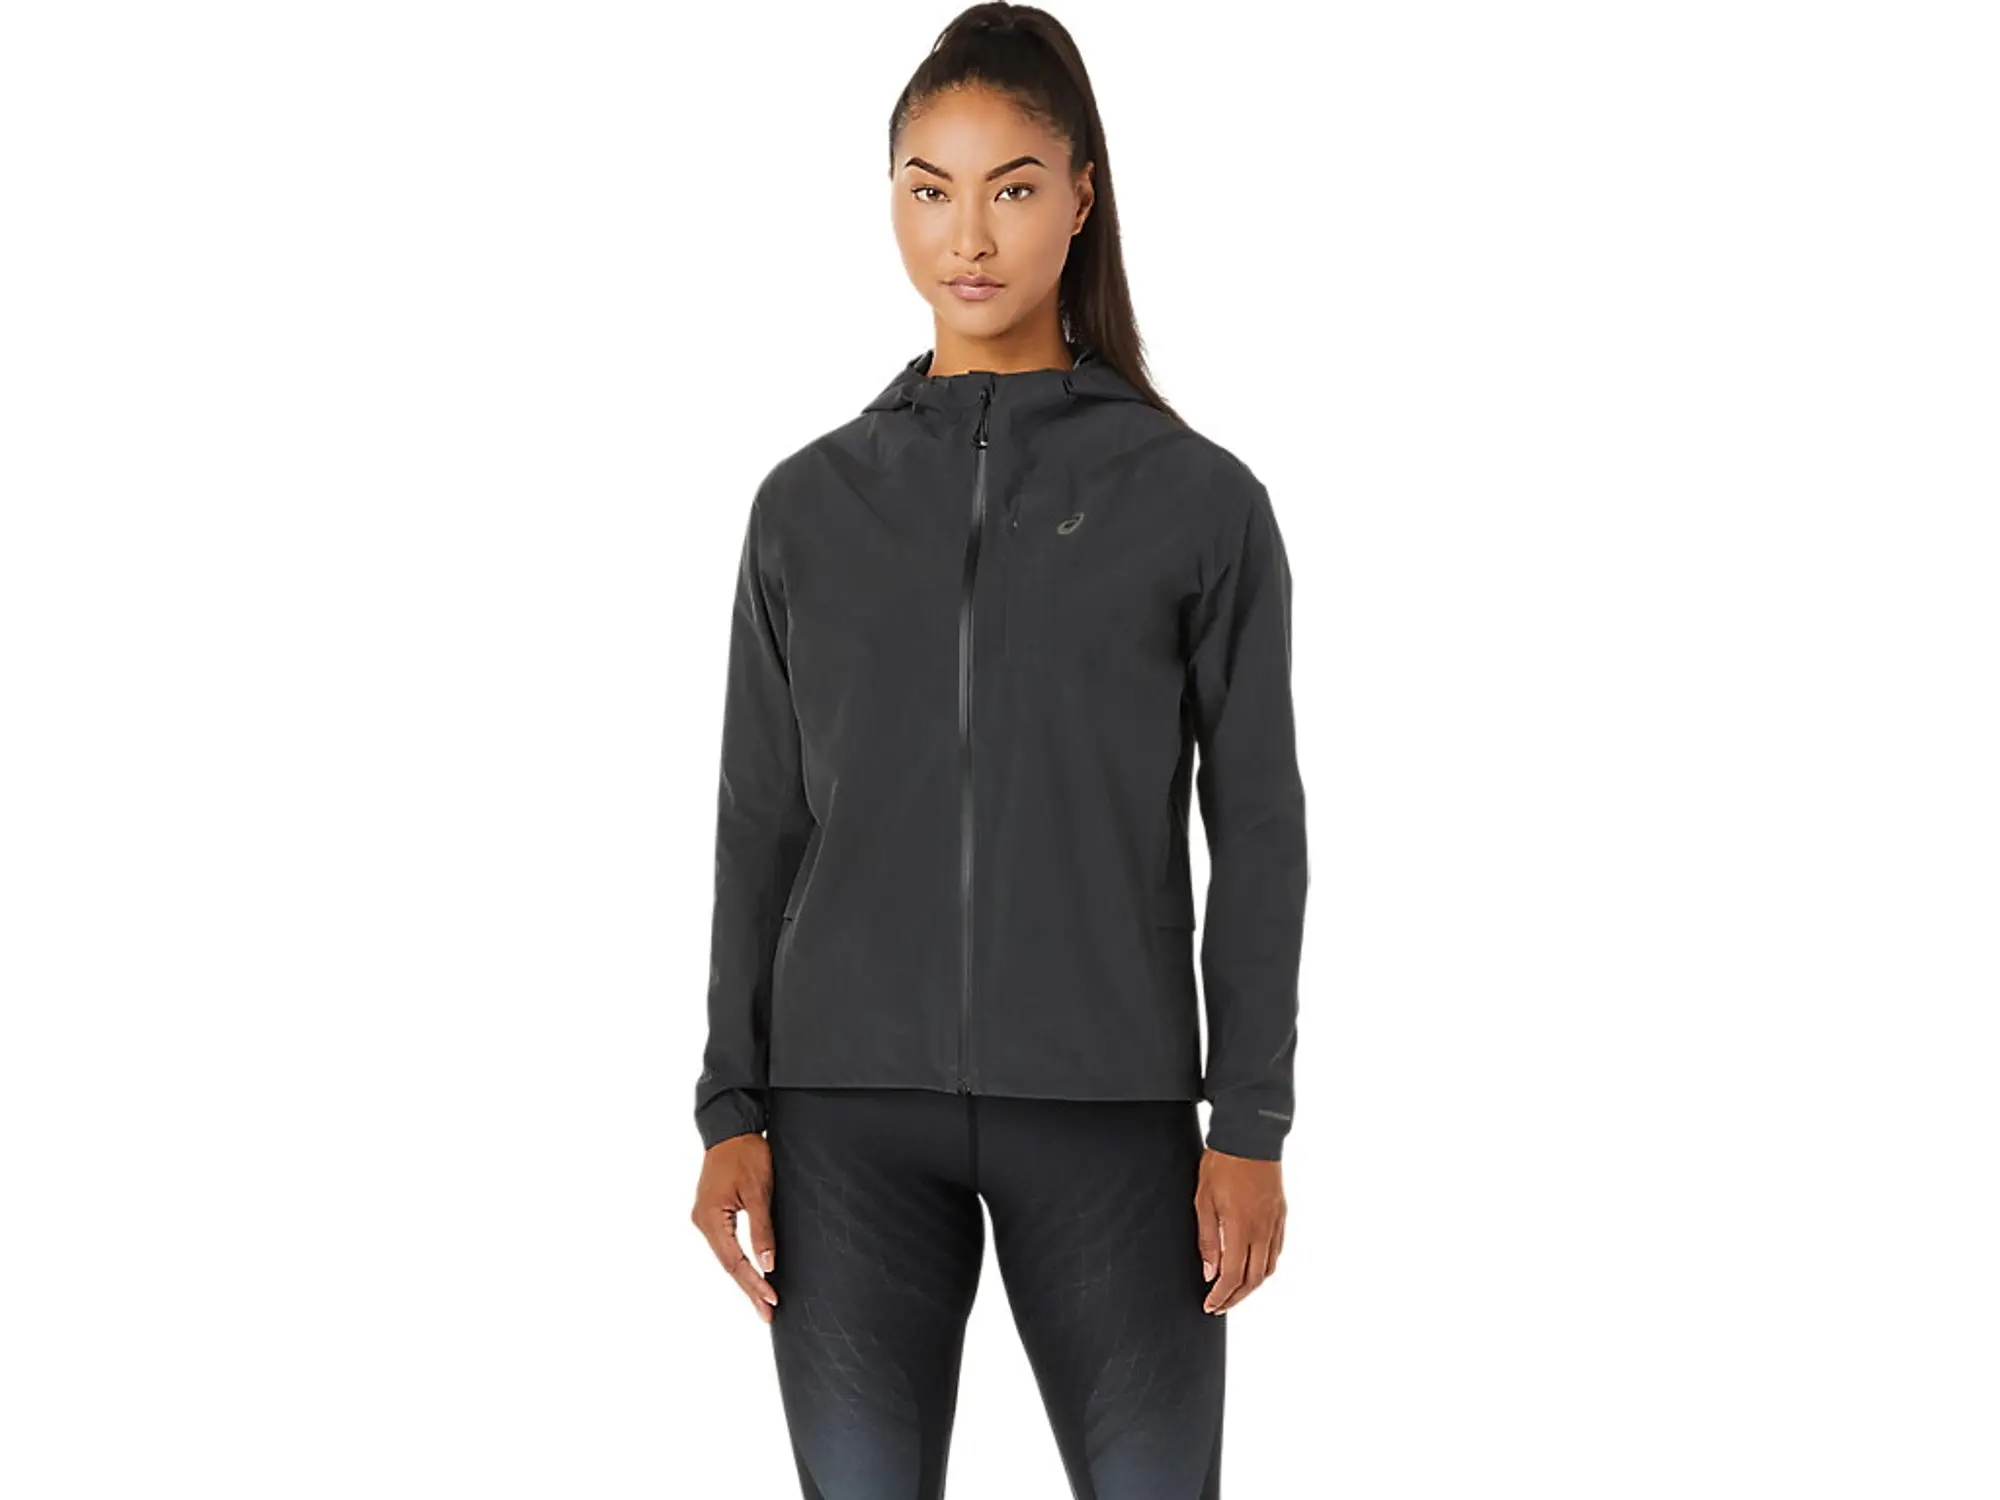 ASICS Accelerate Waterproof 2.0 Jacket Running Jacket Women - Grey